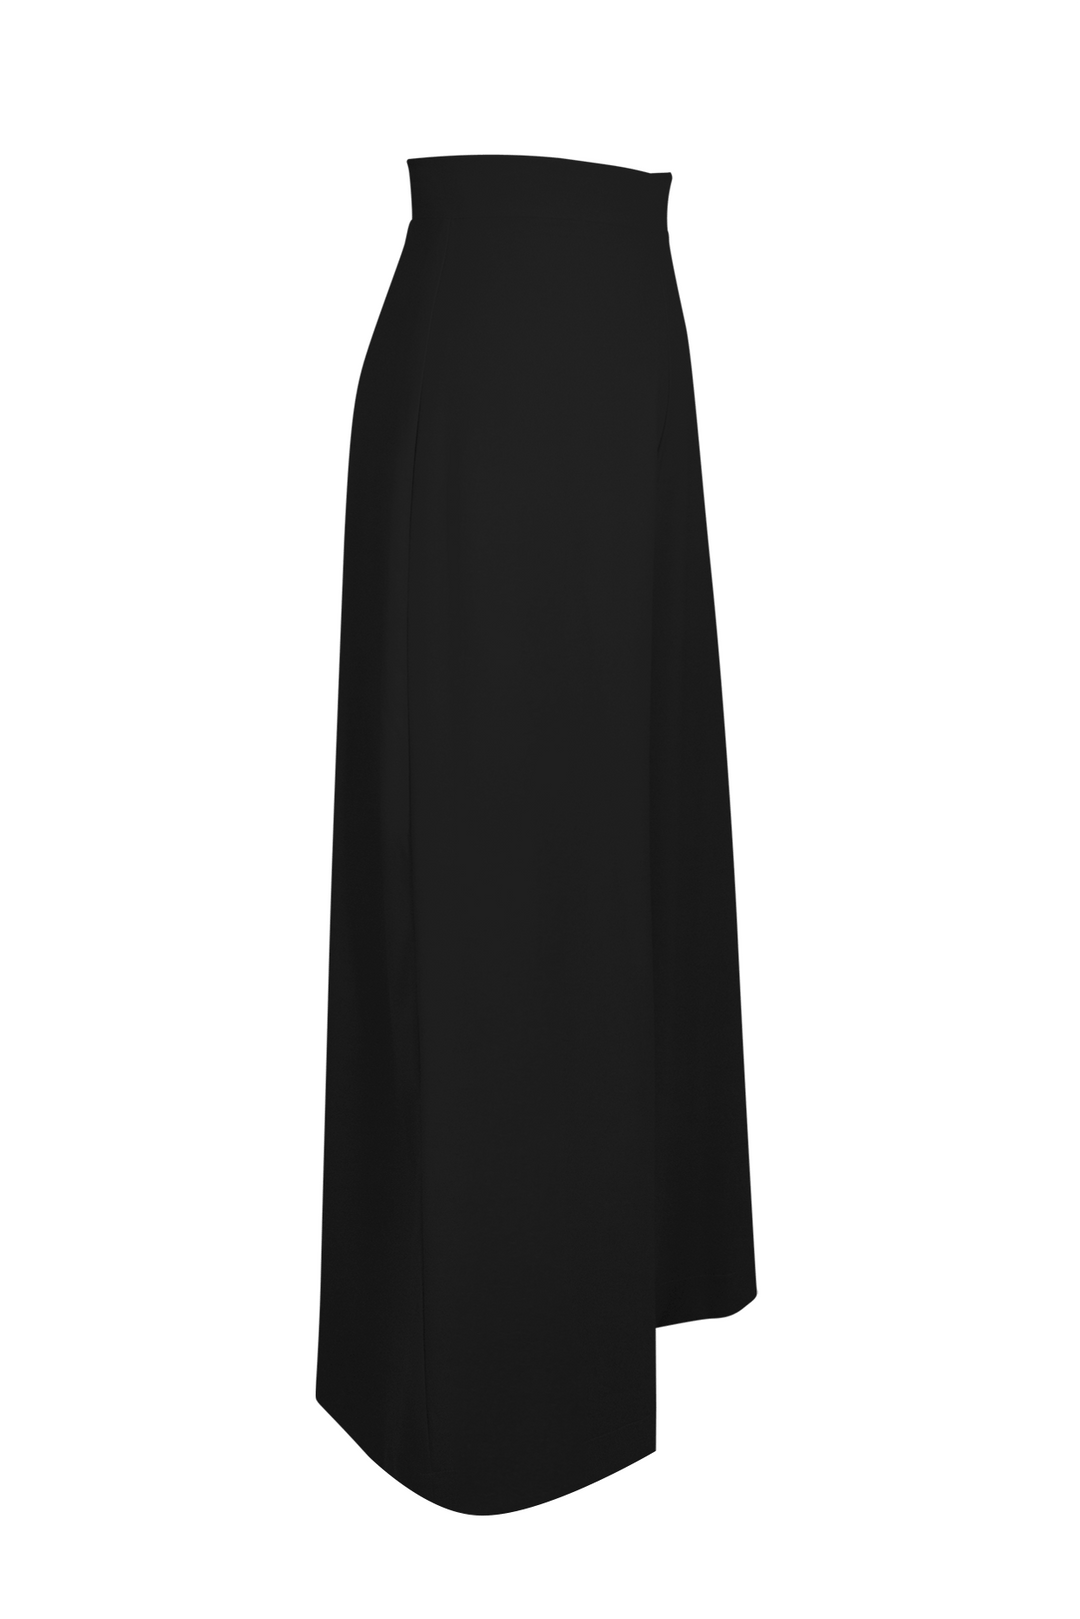 Cotton Tail Soiree Palazzo Pants (Black)